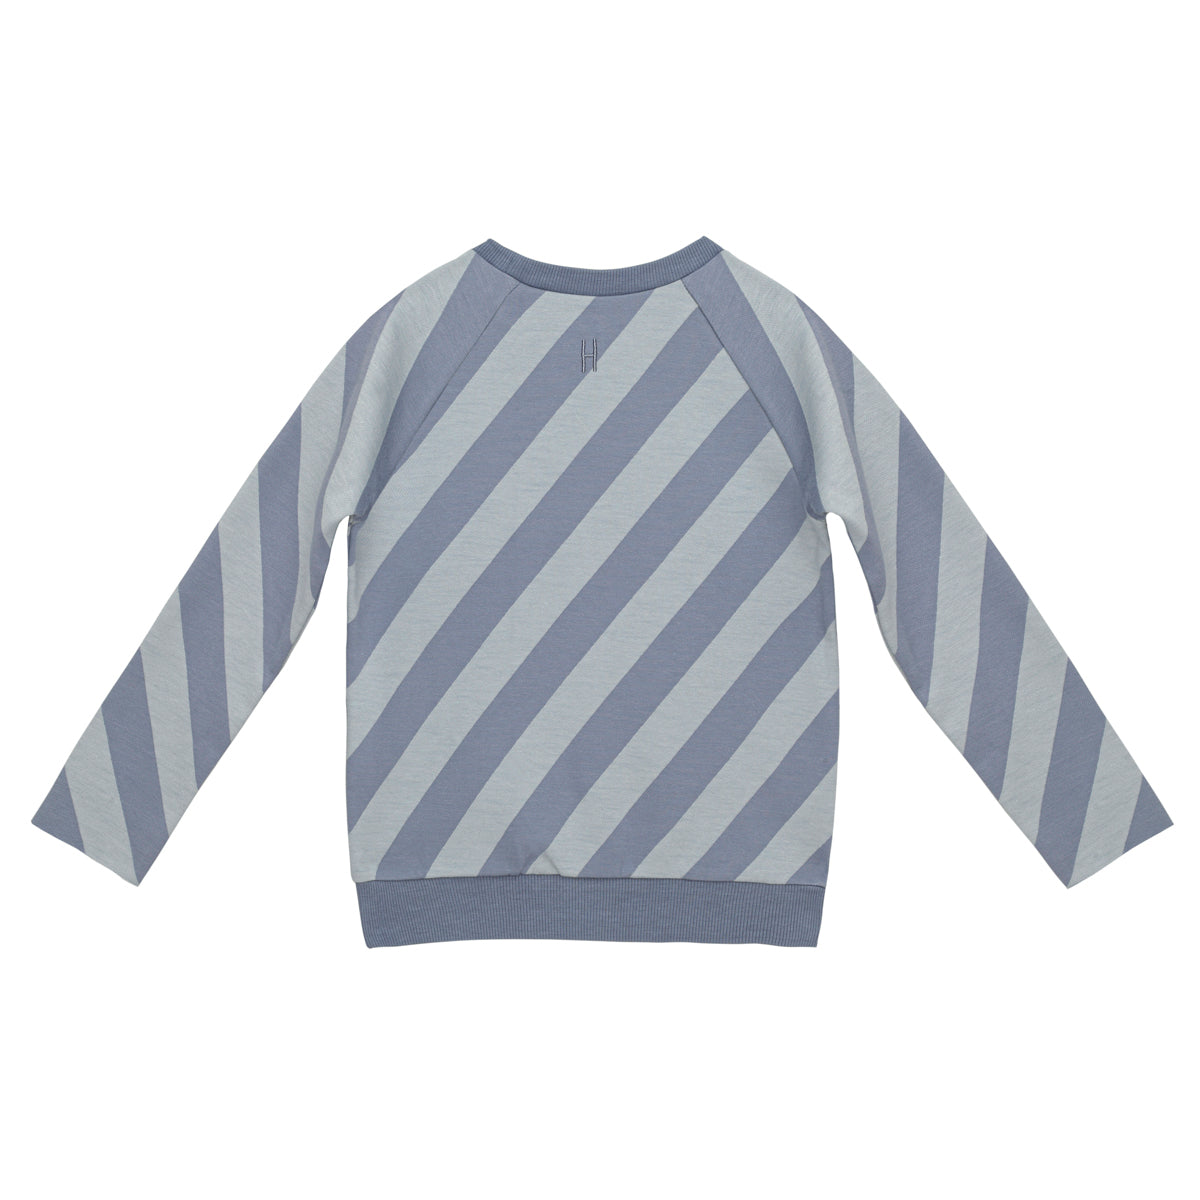 LITTLE HEDONIST - Pull minimaliste bleu et violet neuf - 3 mois